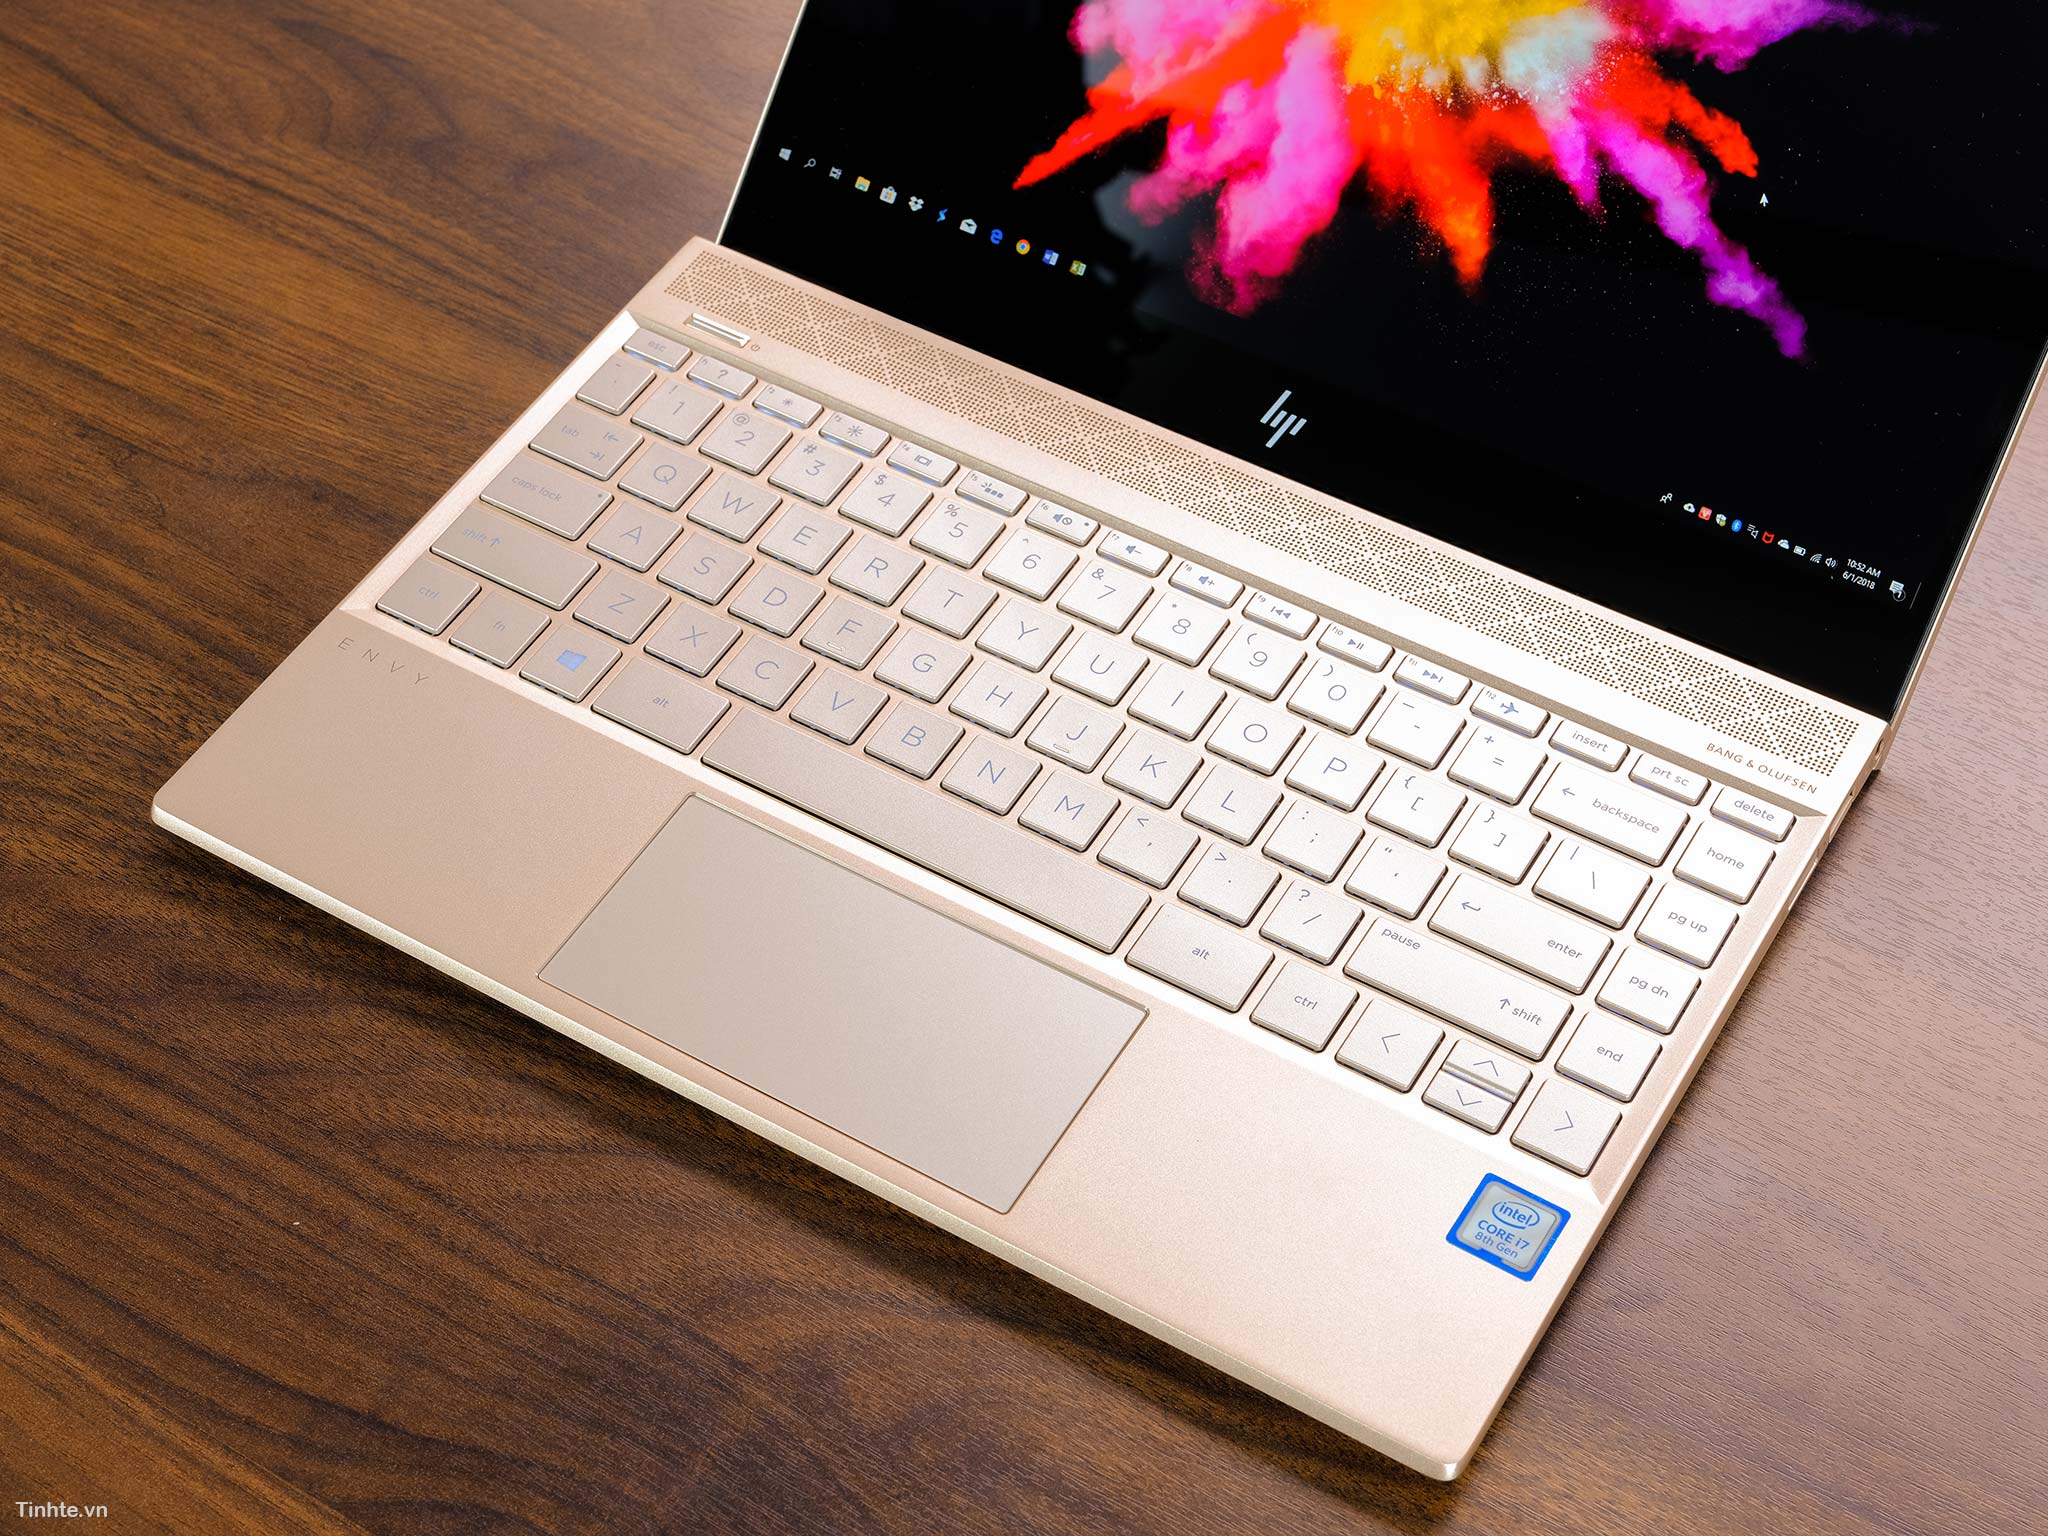 Laptop HP Envy 13 Mode 2018-1.jpg